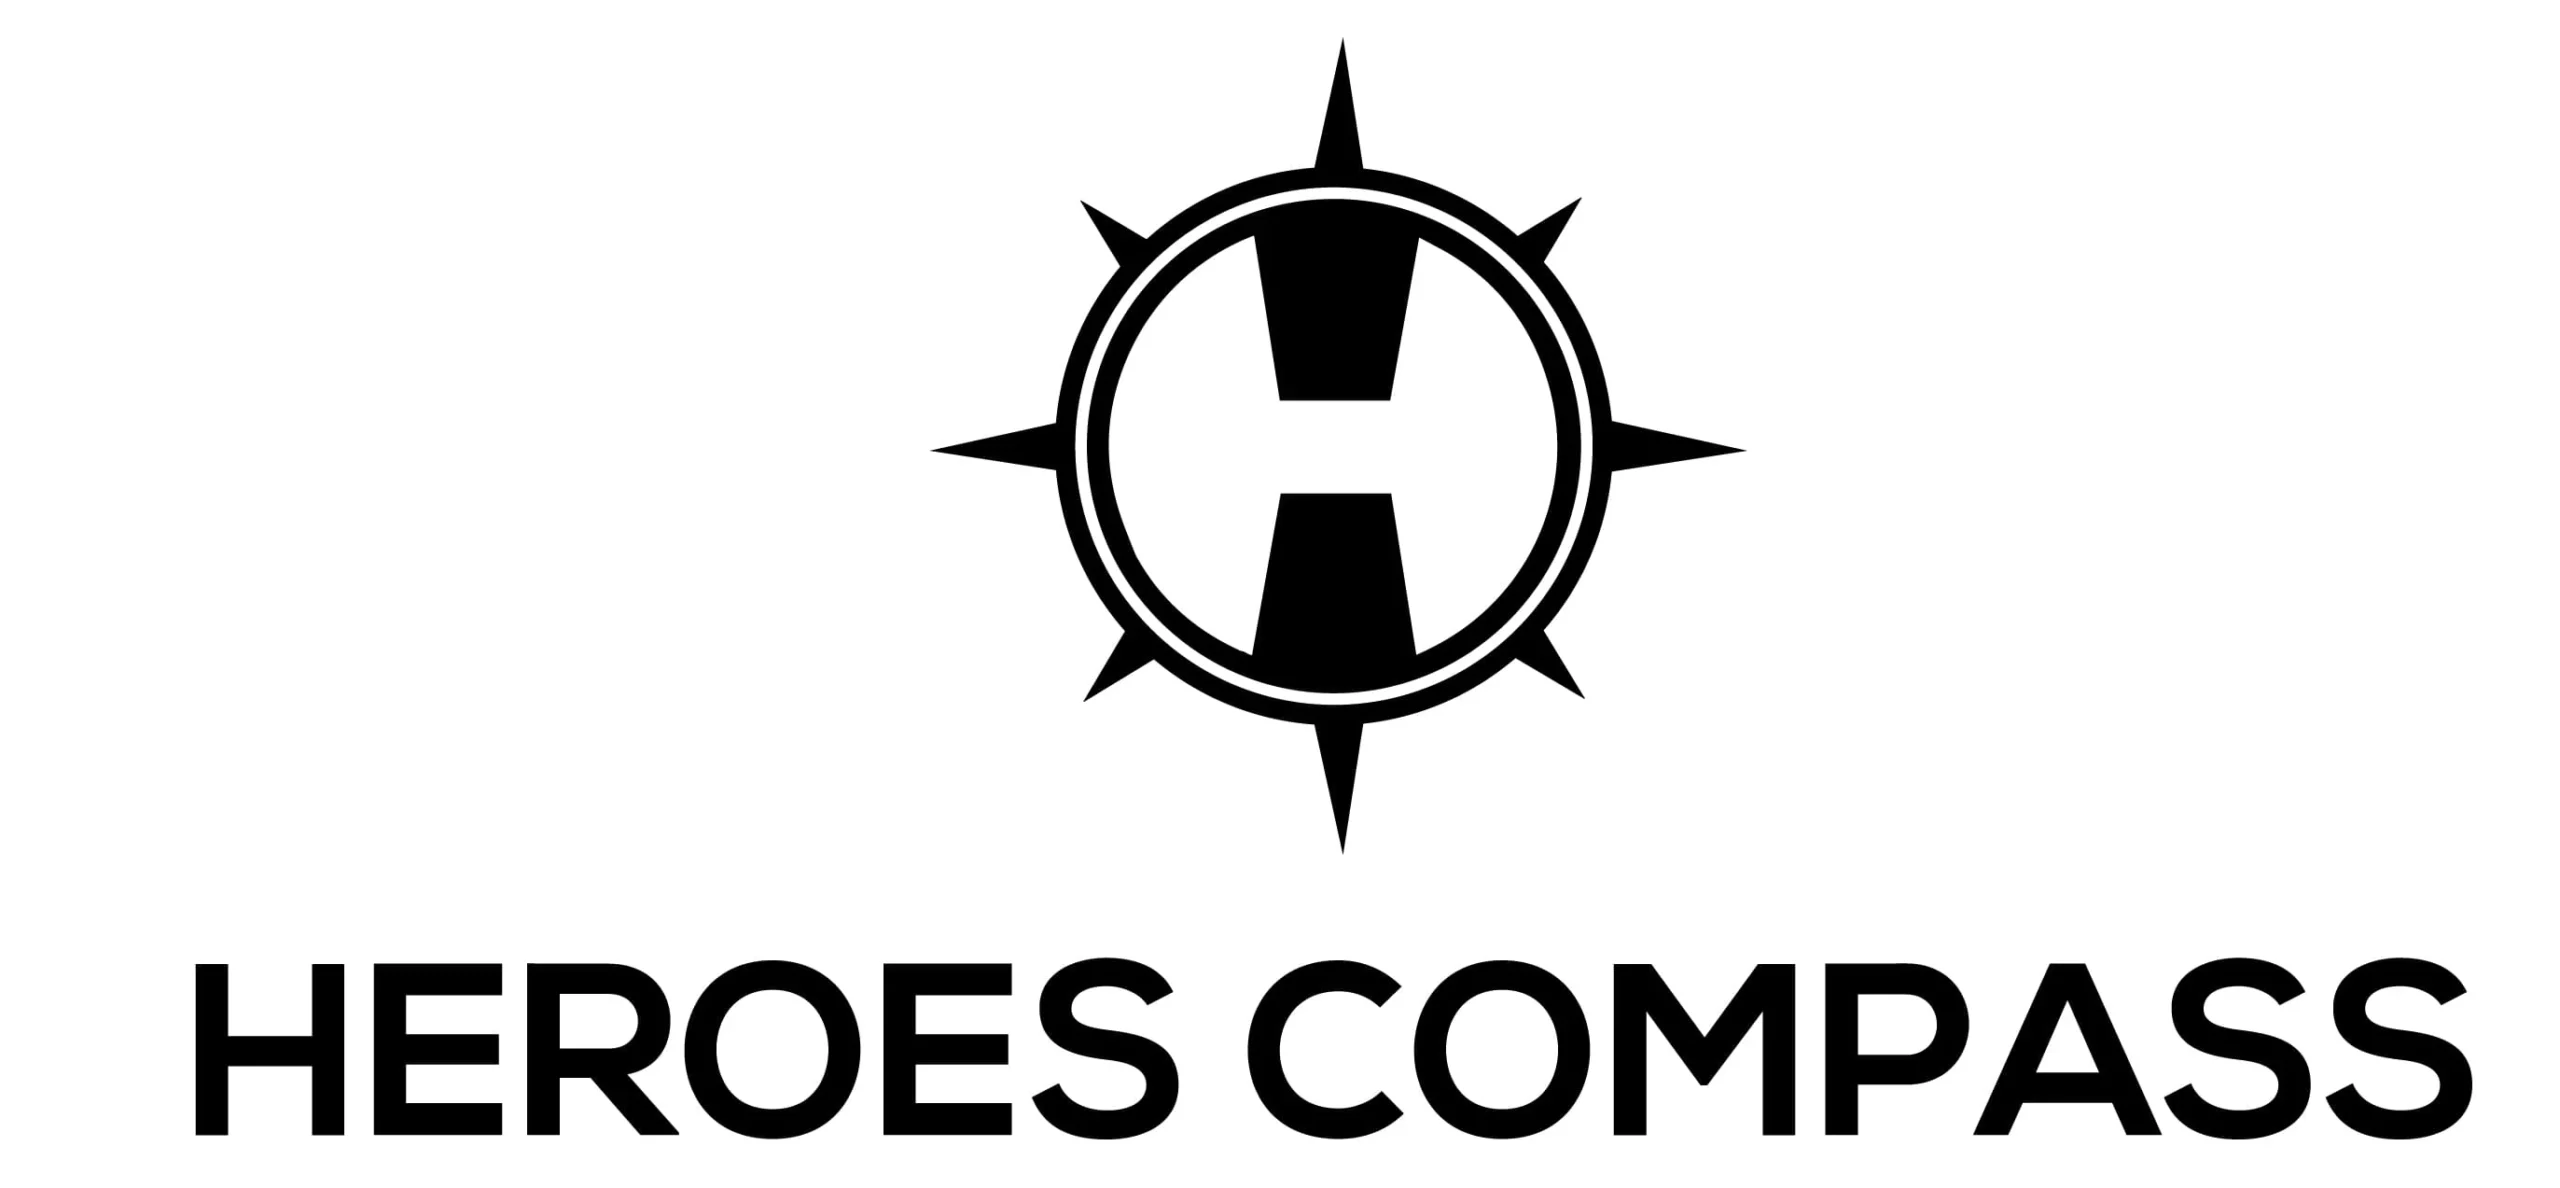 https://www.visionbanks.com/wp-content/uploads/Heroes-Compass-Rev-2-02-scaled.webp